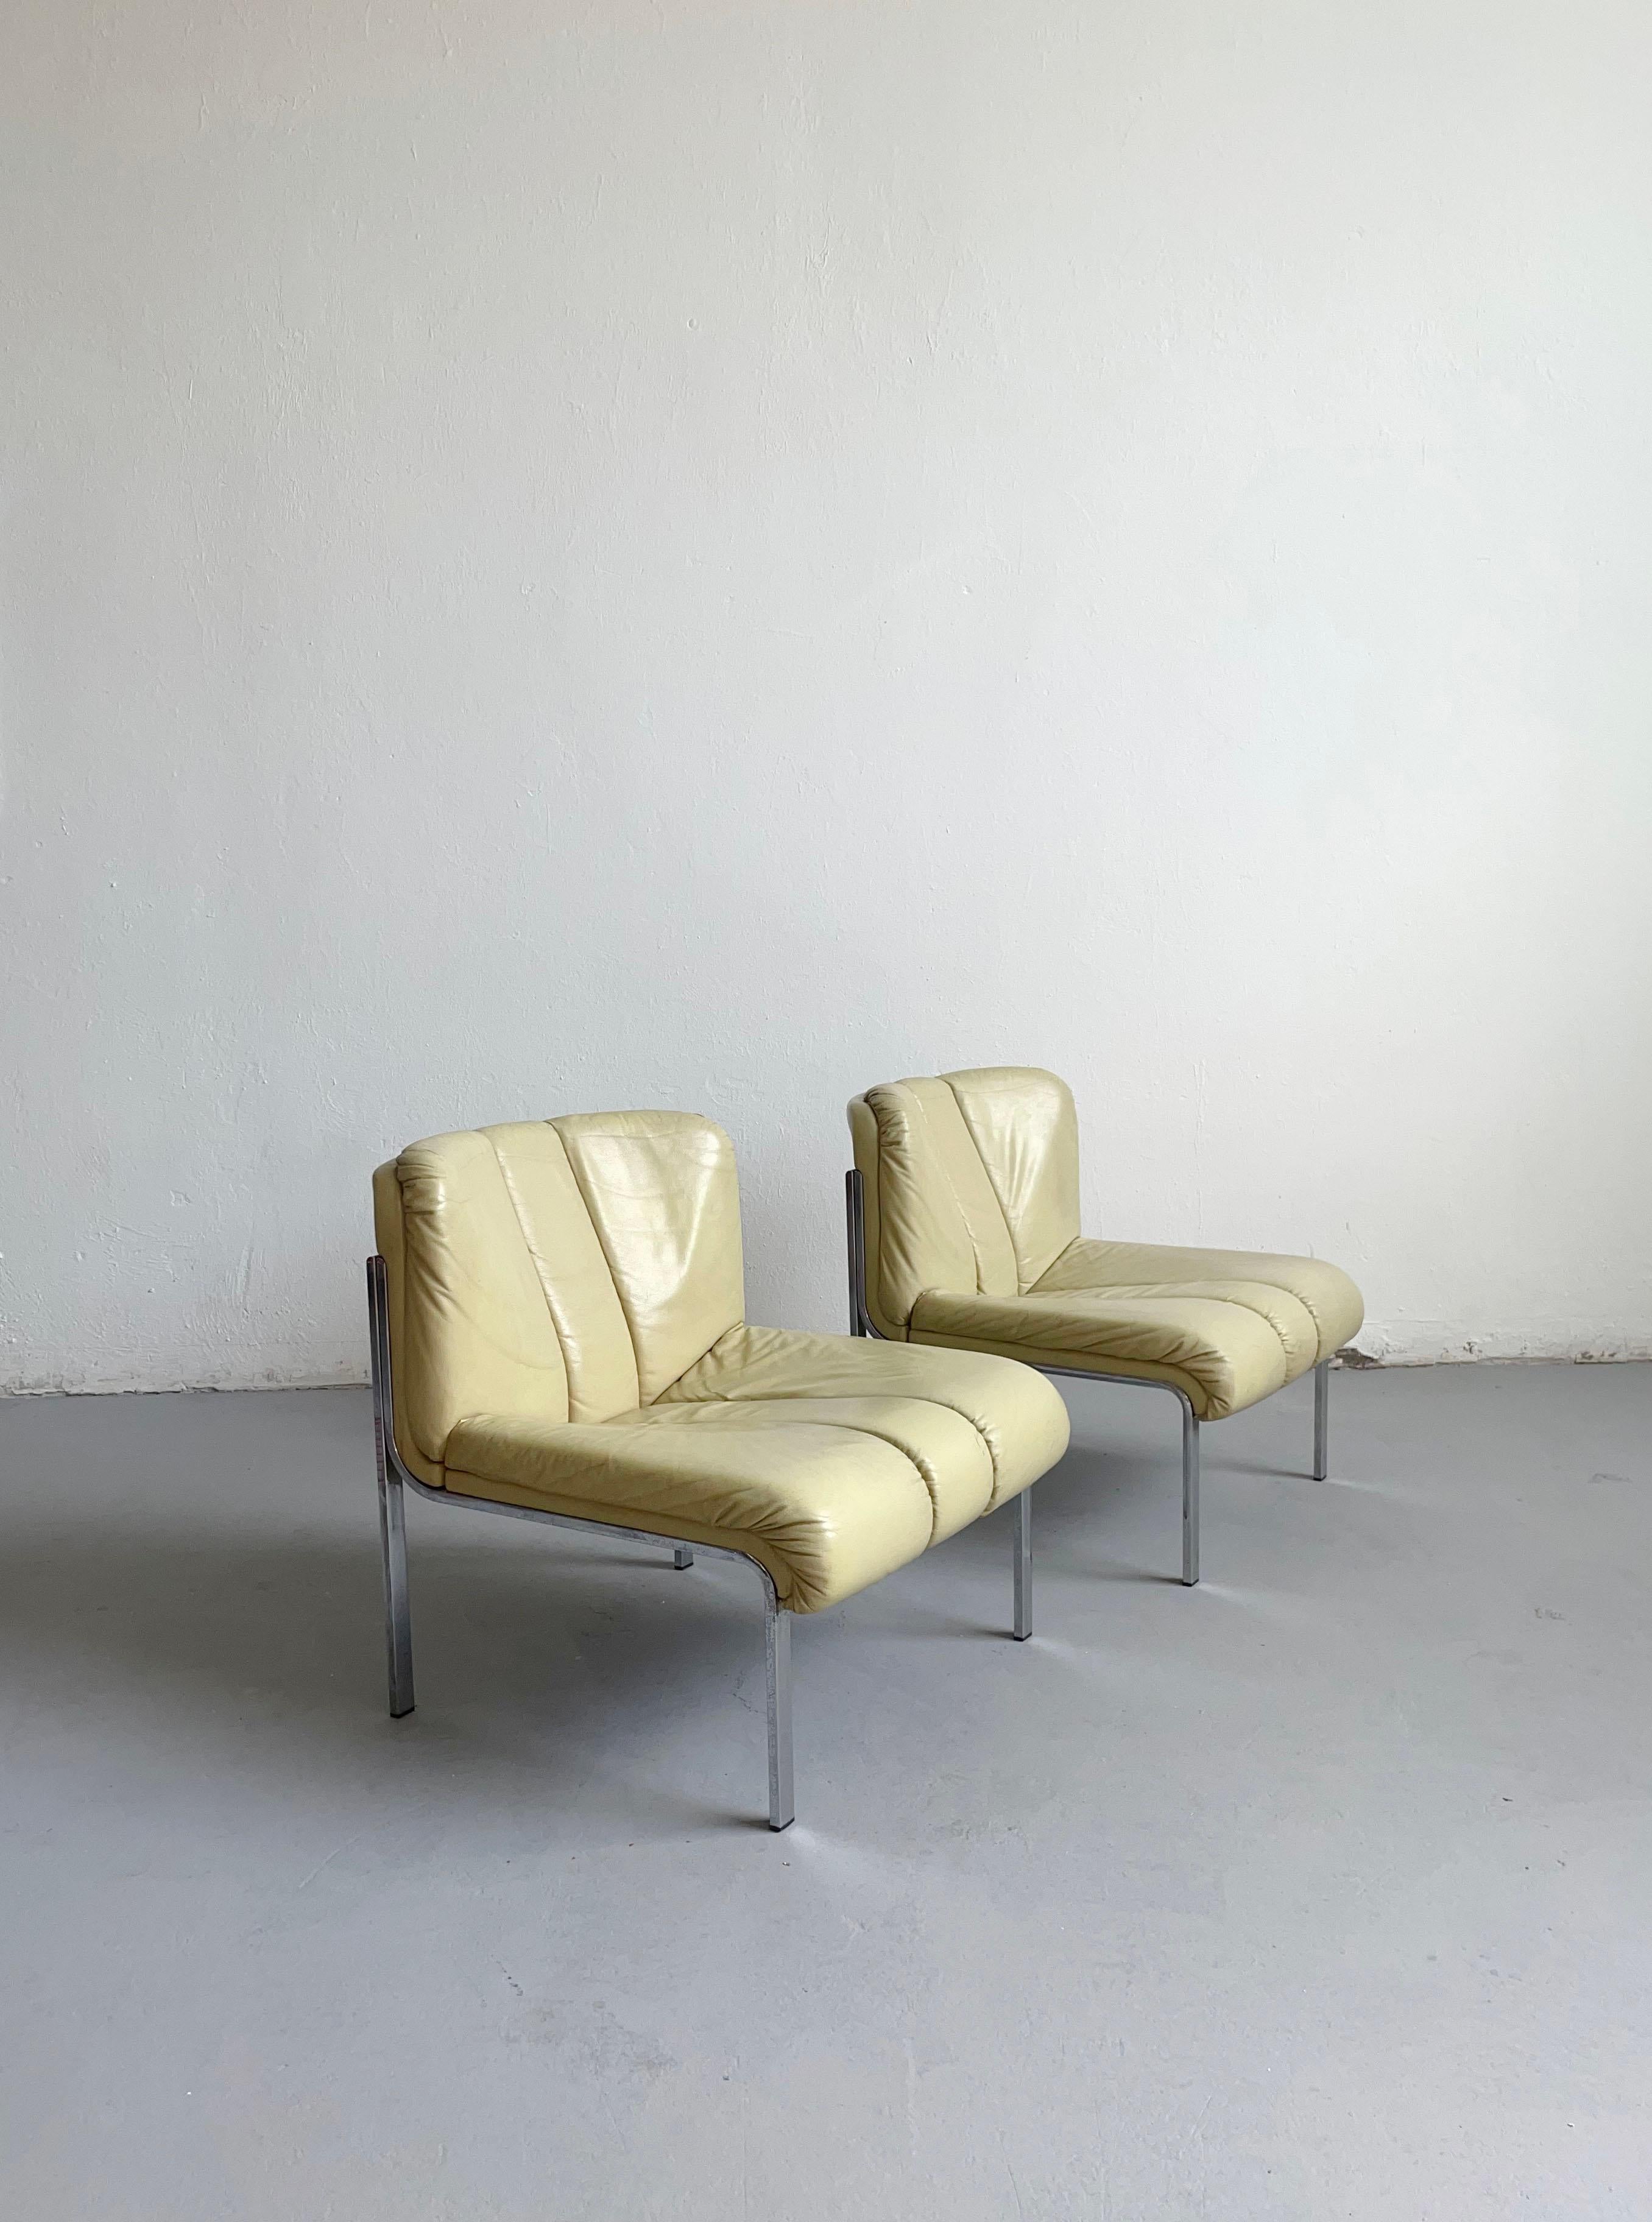 Plated Hans Eichenberger Lounge Chair Model 1200 for Girsberger Eurochair, Set of 2